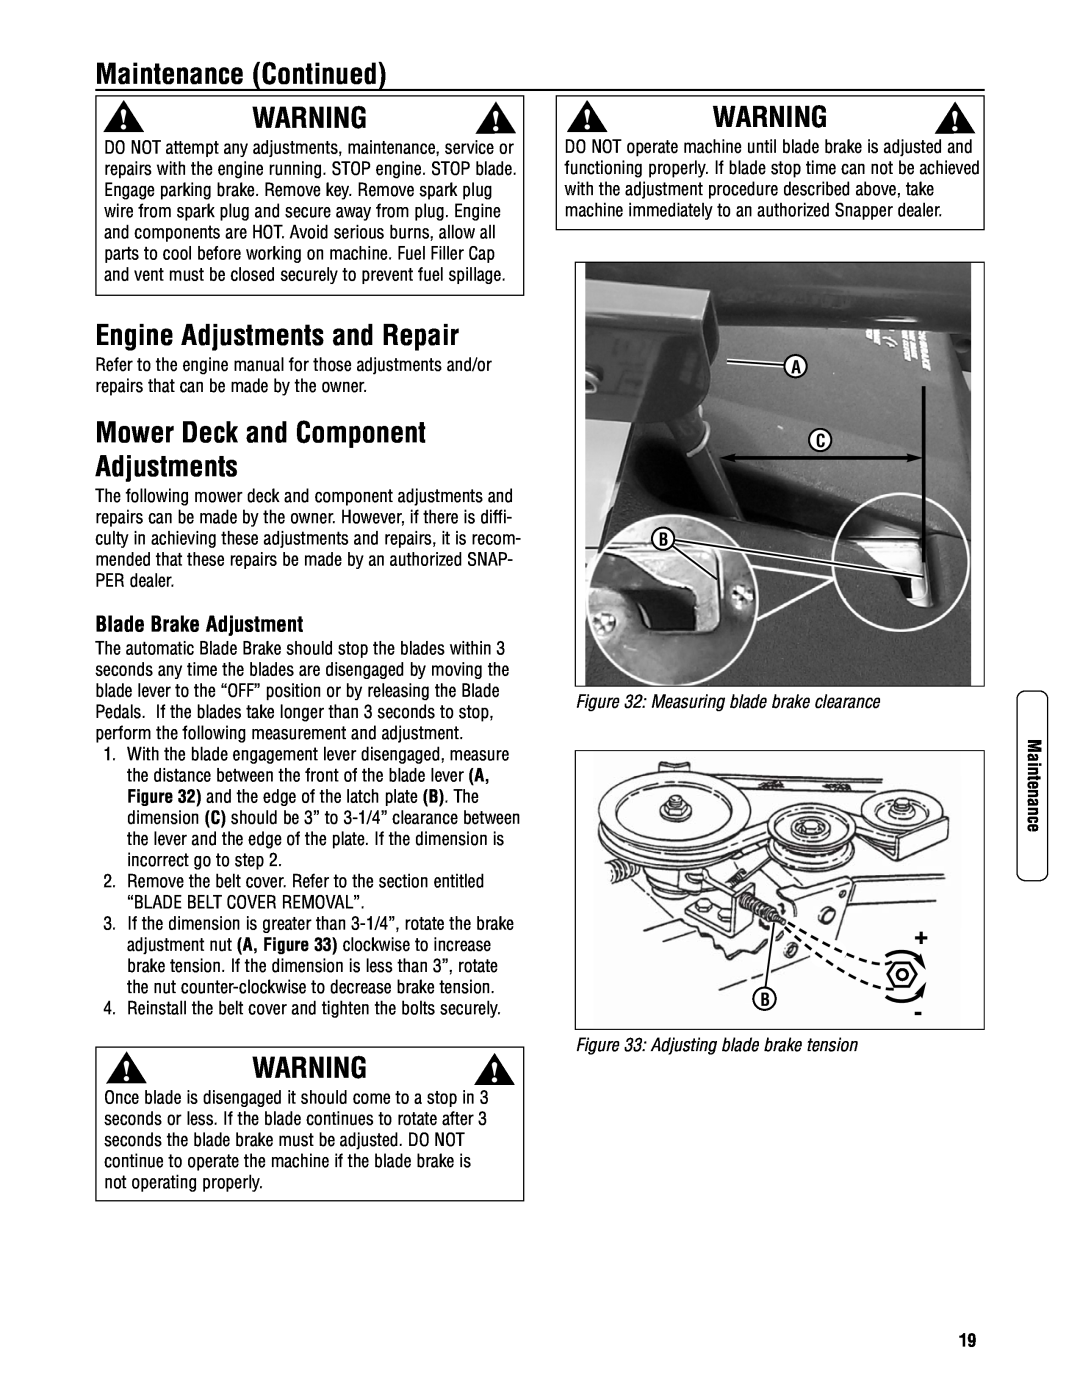 Snapper 3317523BVE Engine Adjustments and Repair, Mower Deck and Component Adjustments, Blade Brake Adjustment 